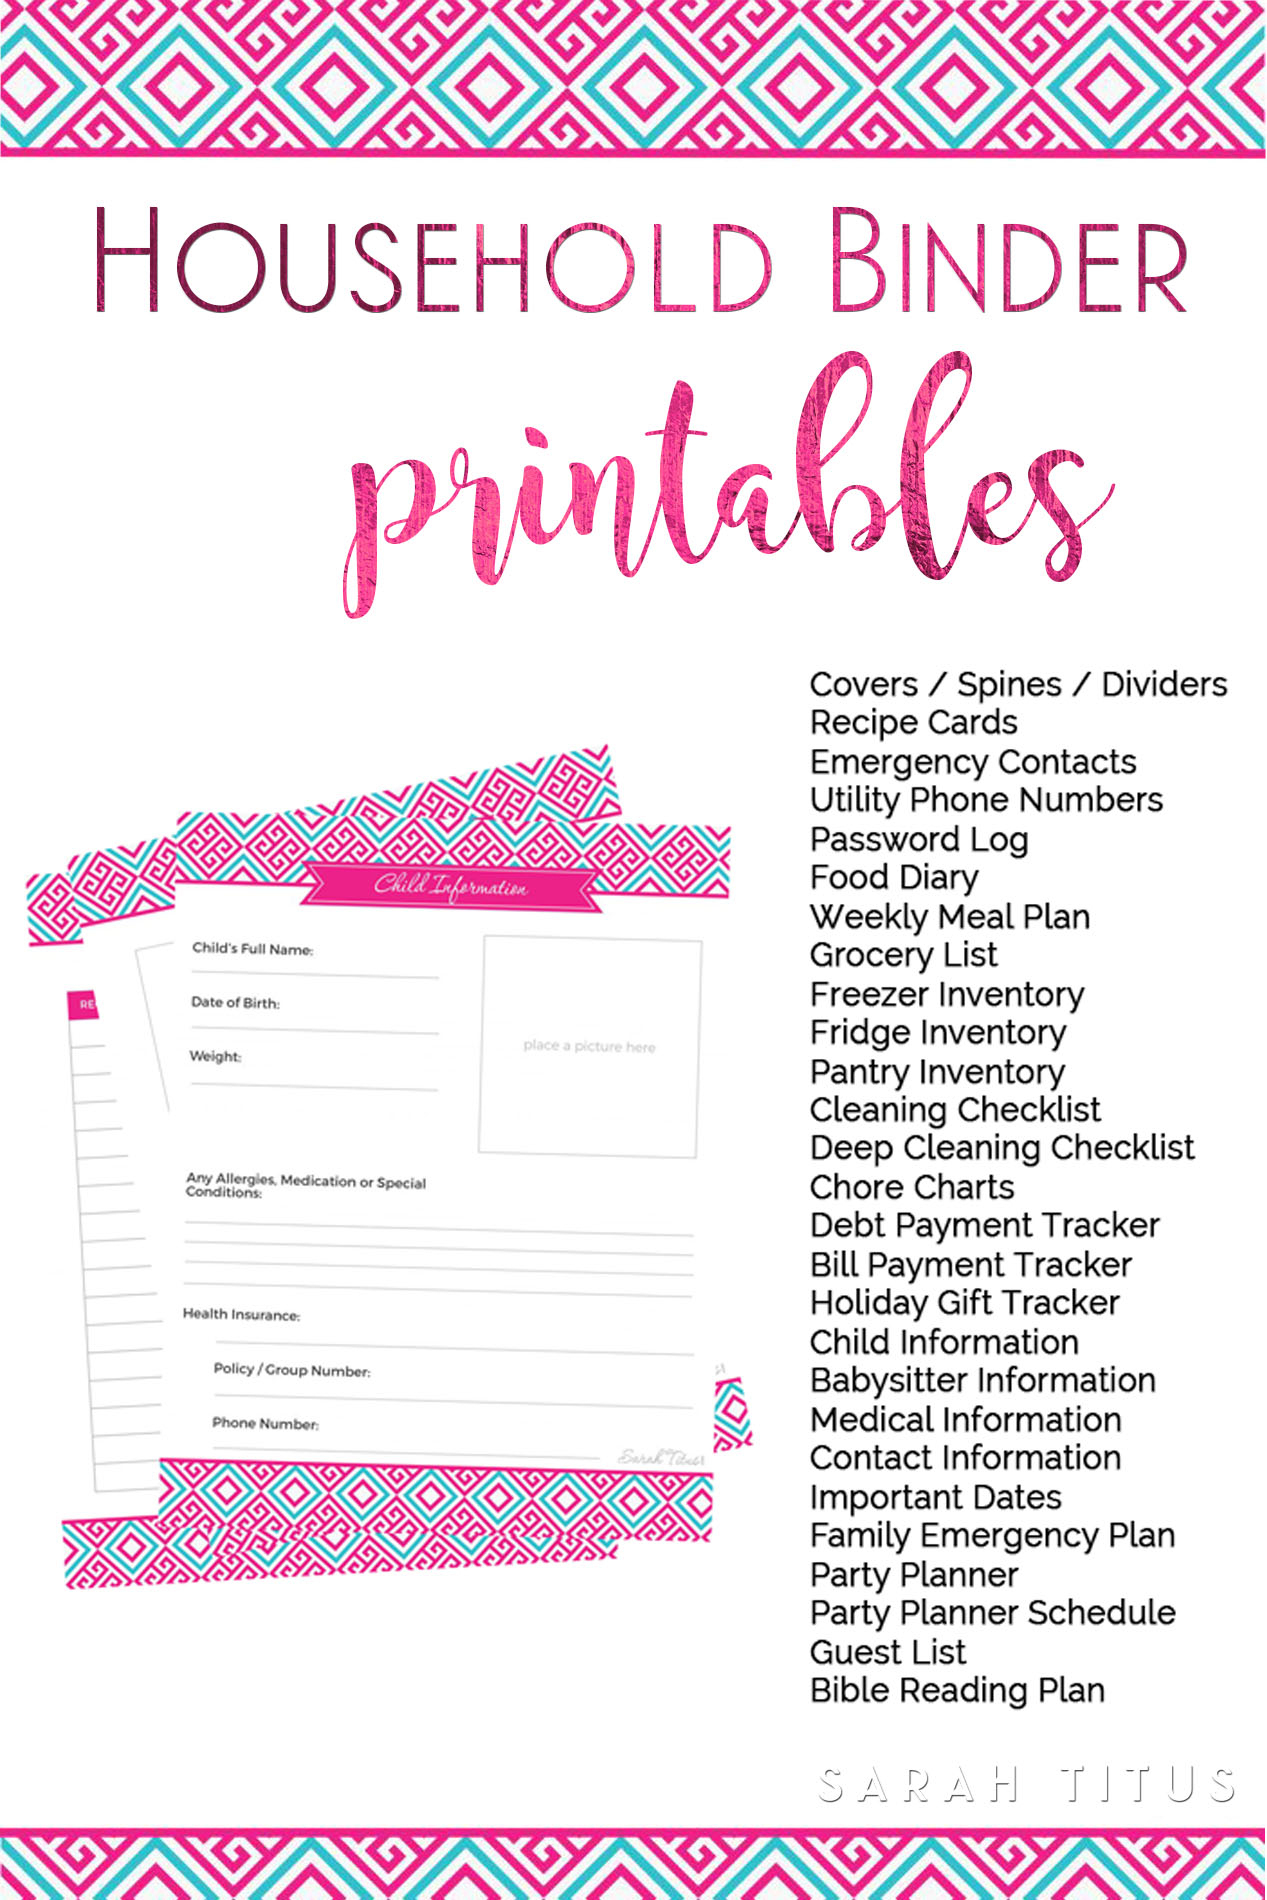 Household Binder Free Printables - Sarah Titus | Free Printable Home Organization Worksheets